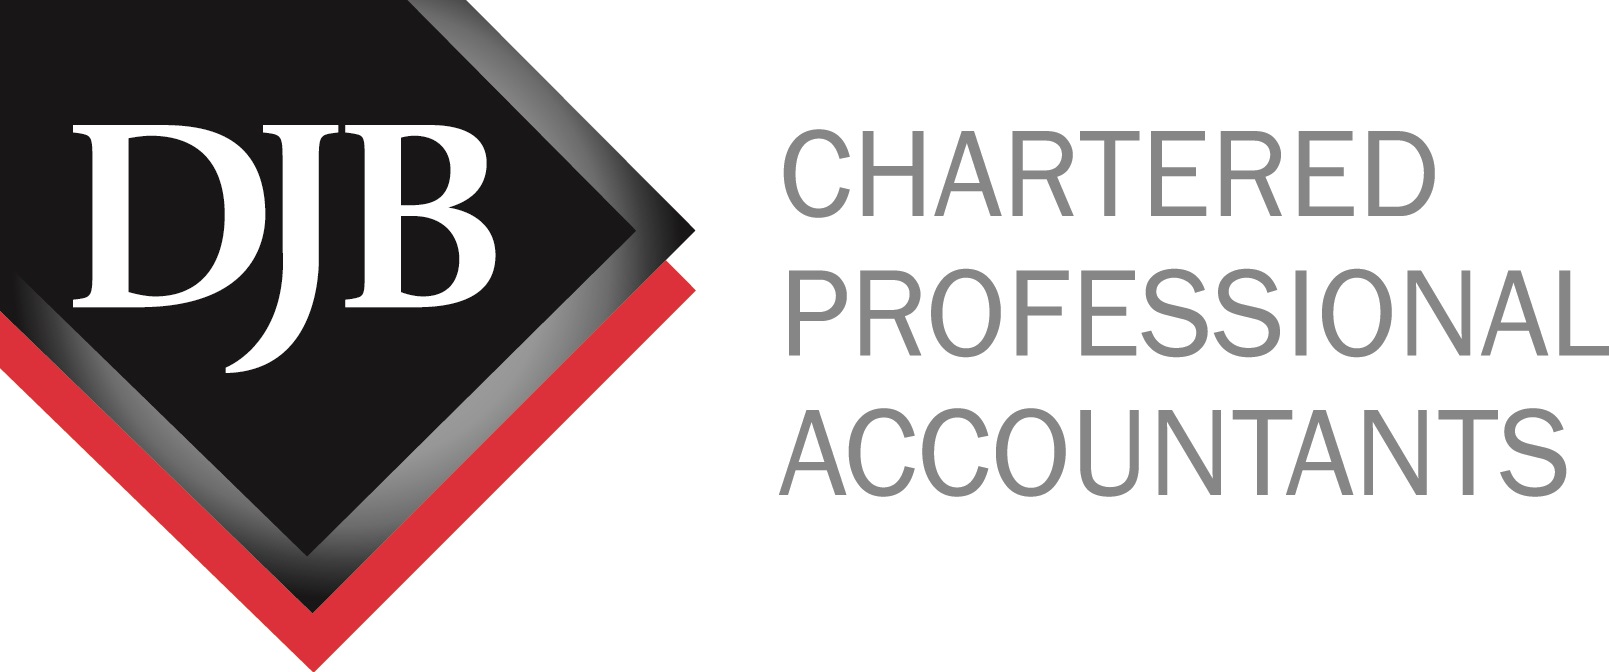 DJB Chartered Professional Accountants